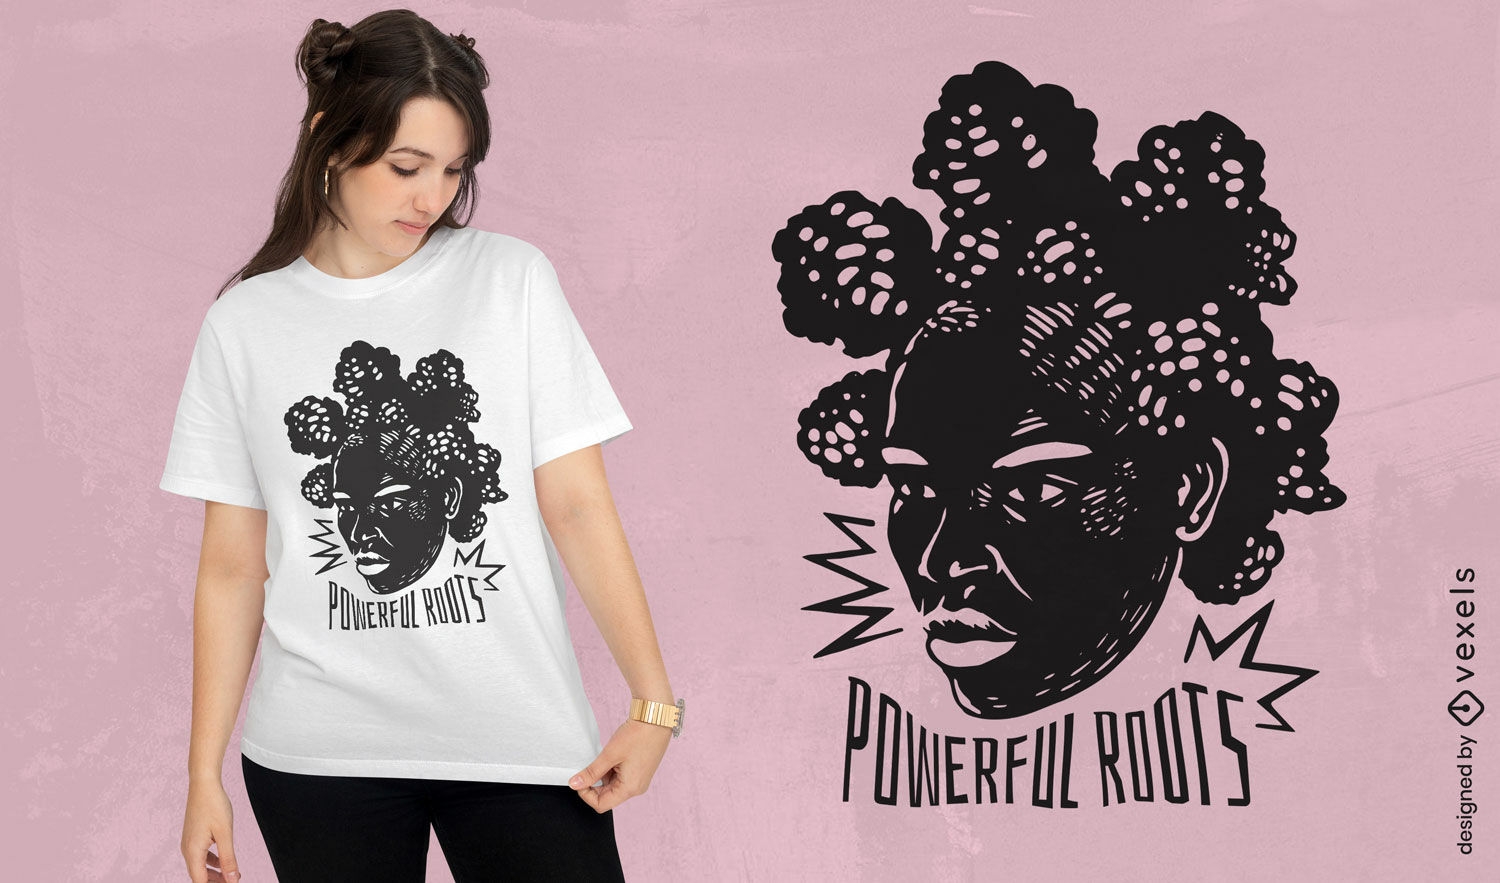 Powerful roots black woman t-shirt design